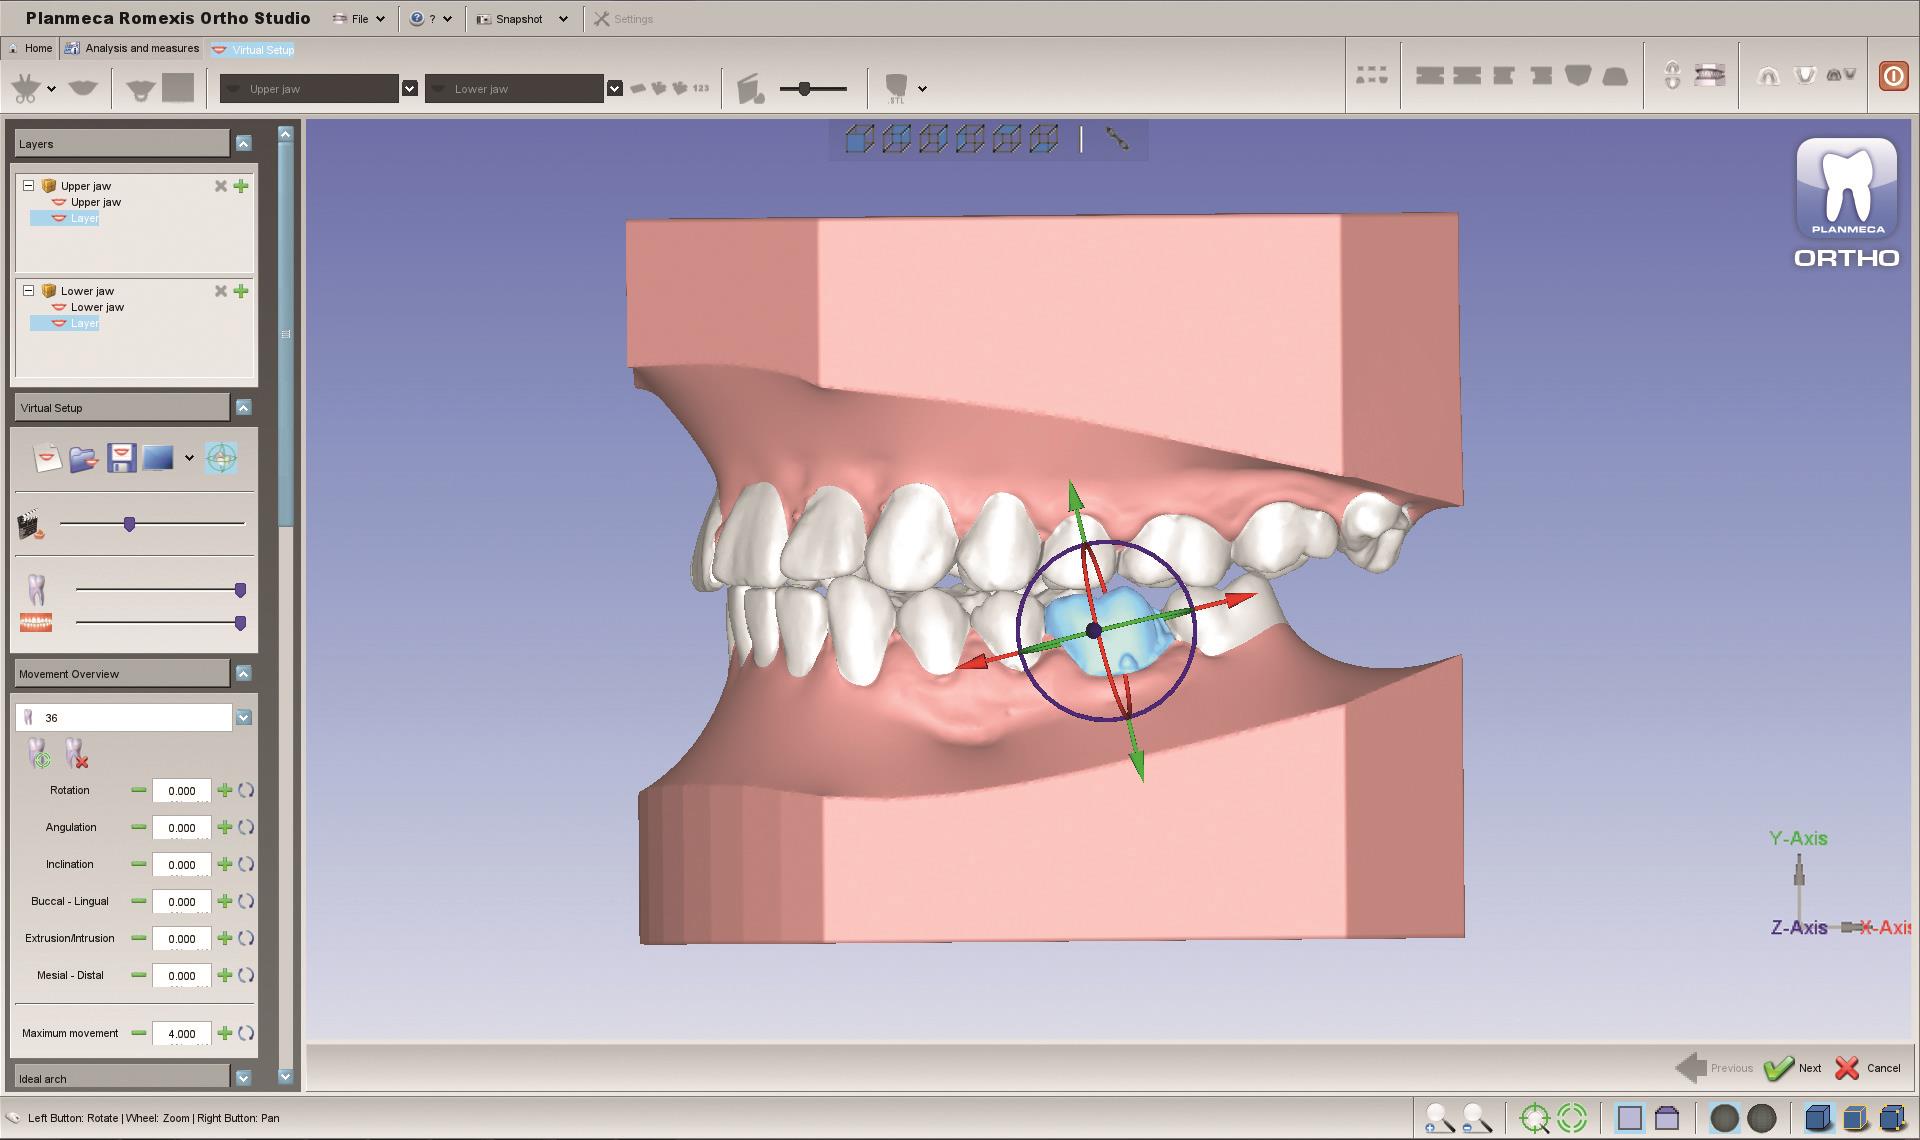 Planmeca presenta nuovi strumenti 3D per gli ortodontisti e i laboratori odontotecnici